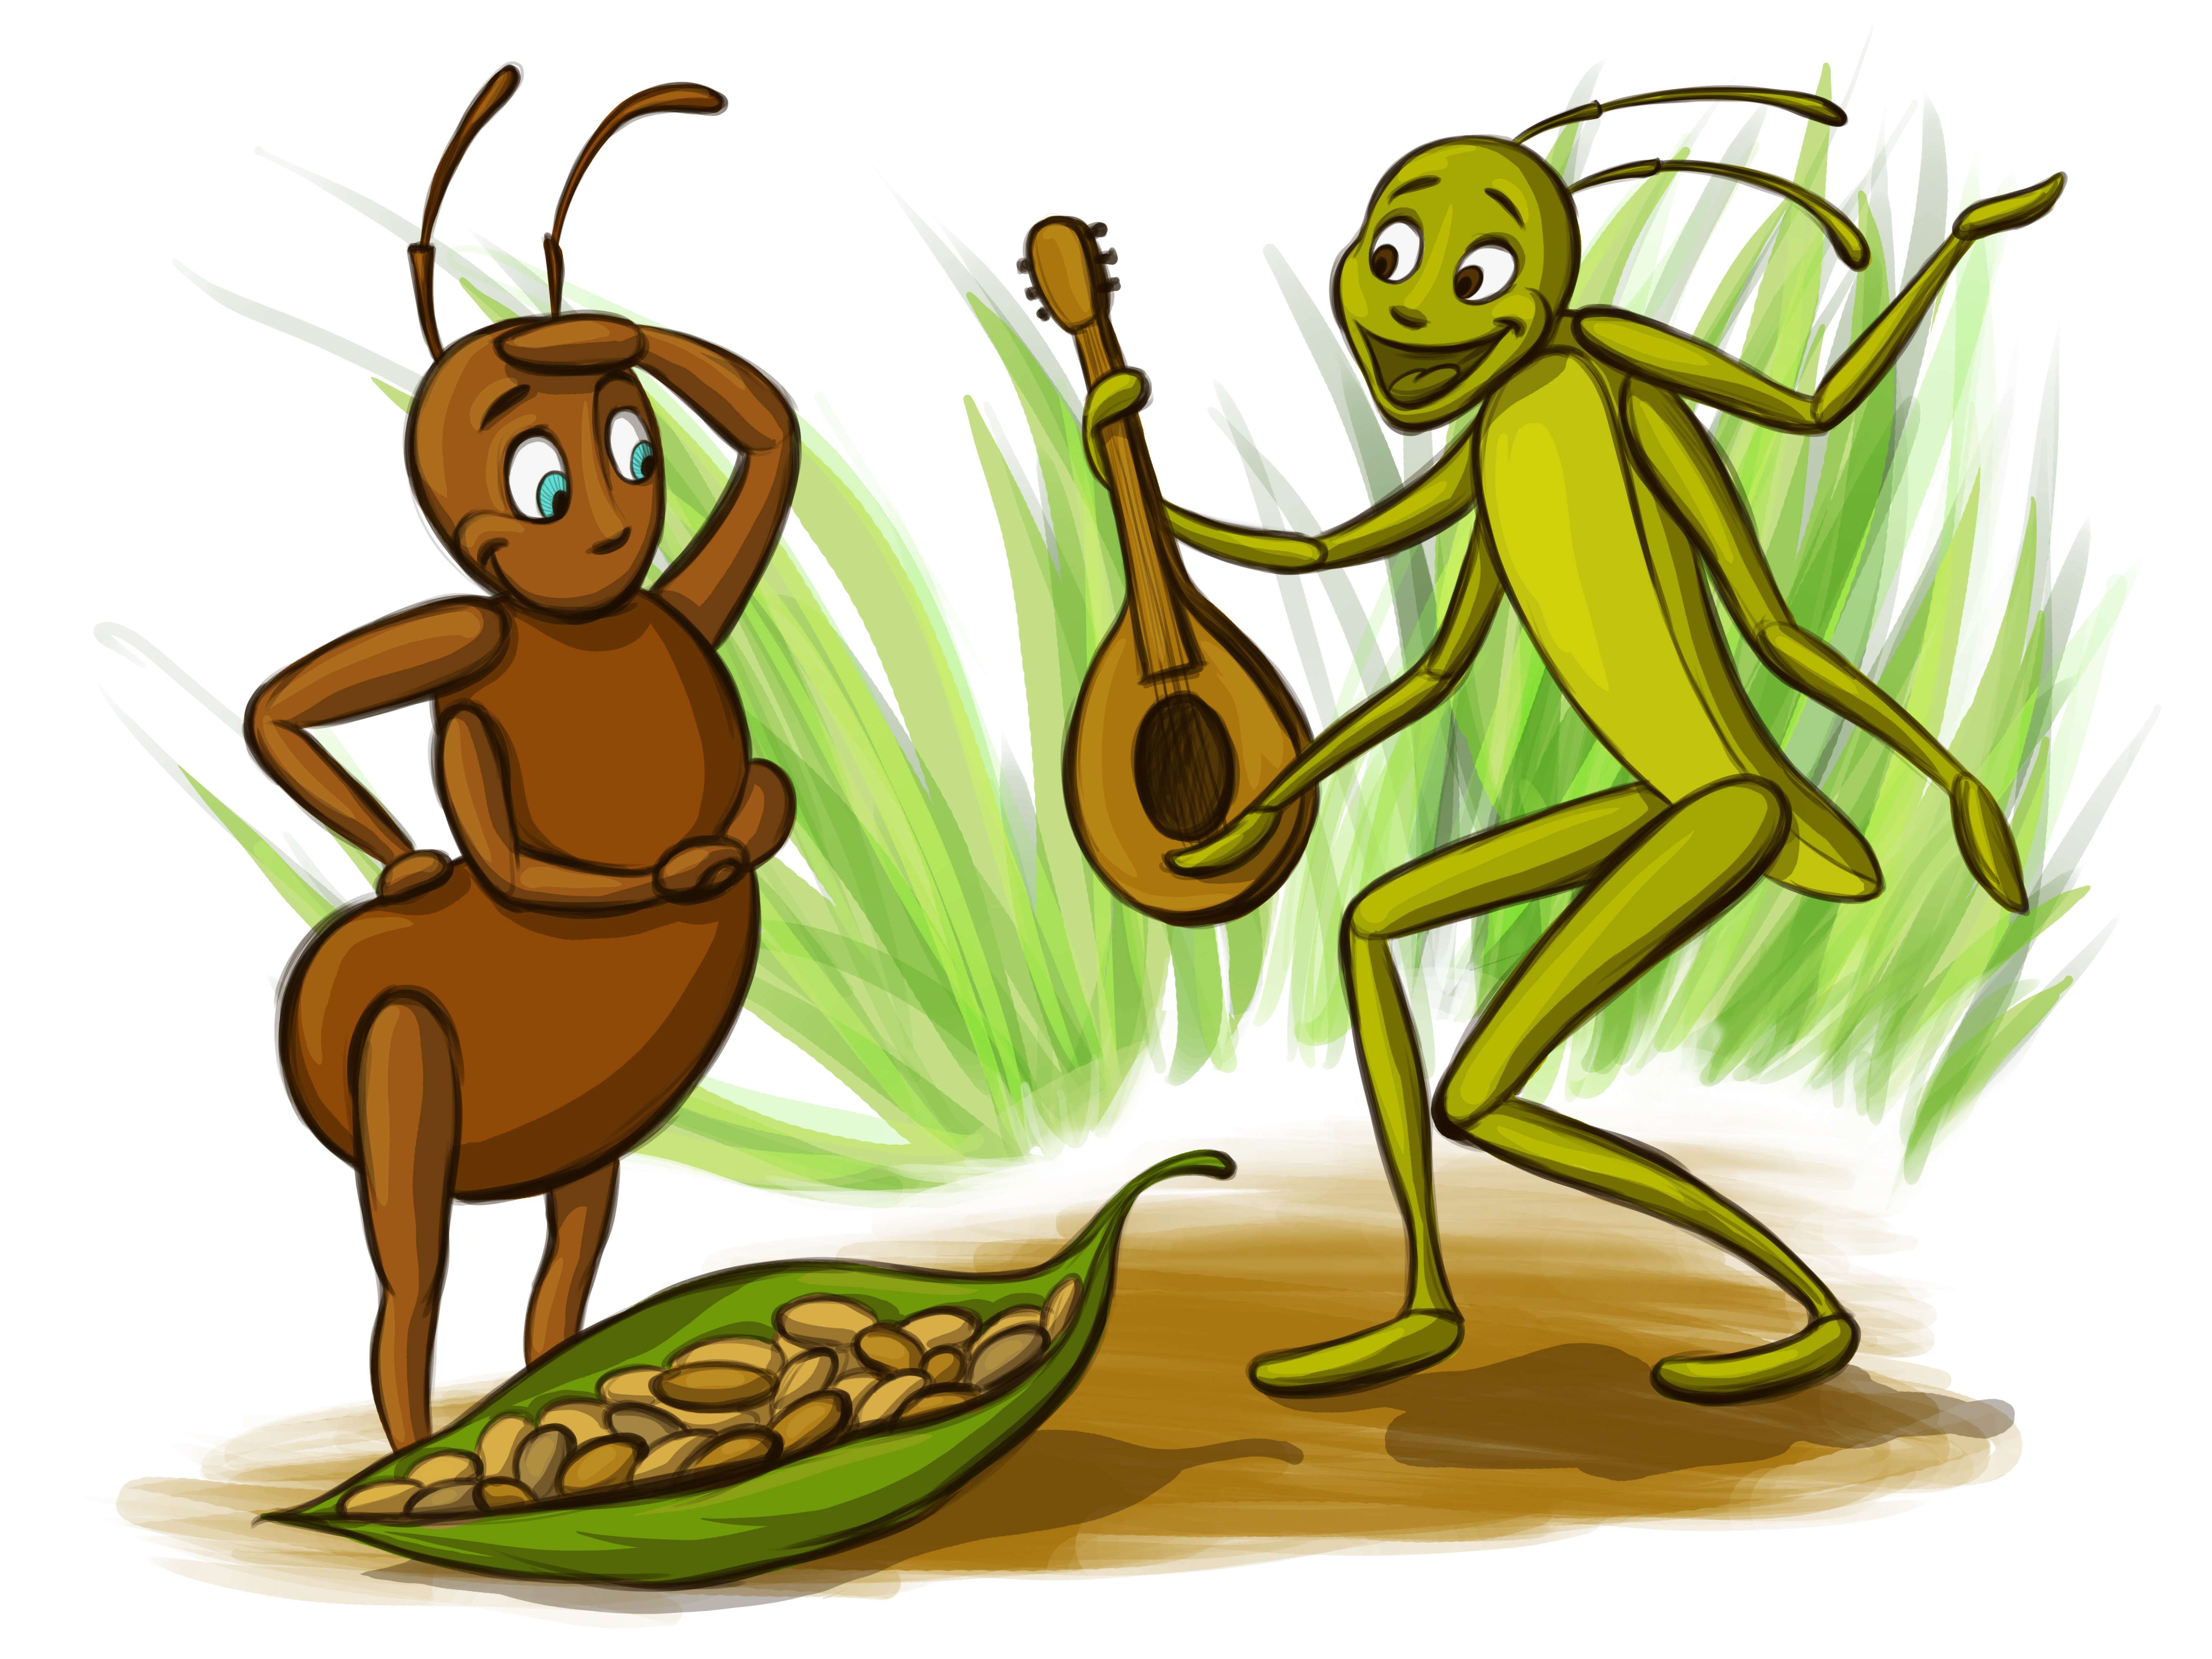 Grasshopper and the Ant by Adelya Tumasyeva at Coroflot.com